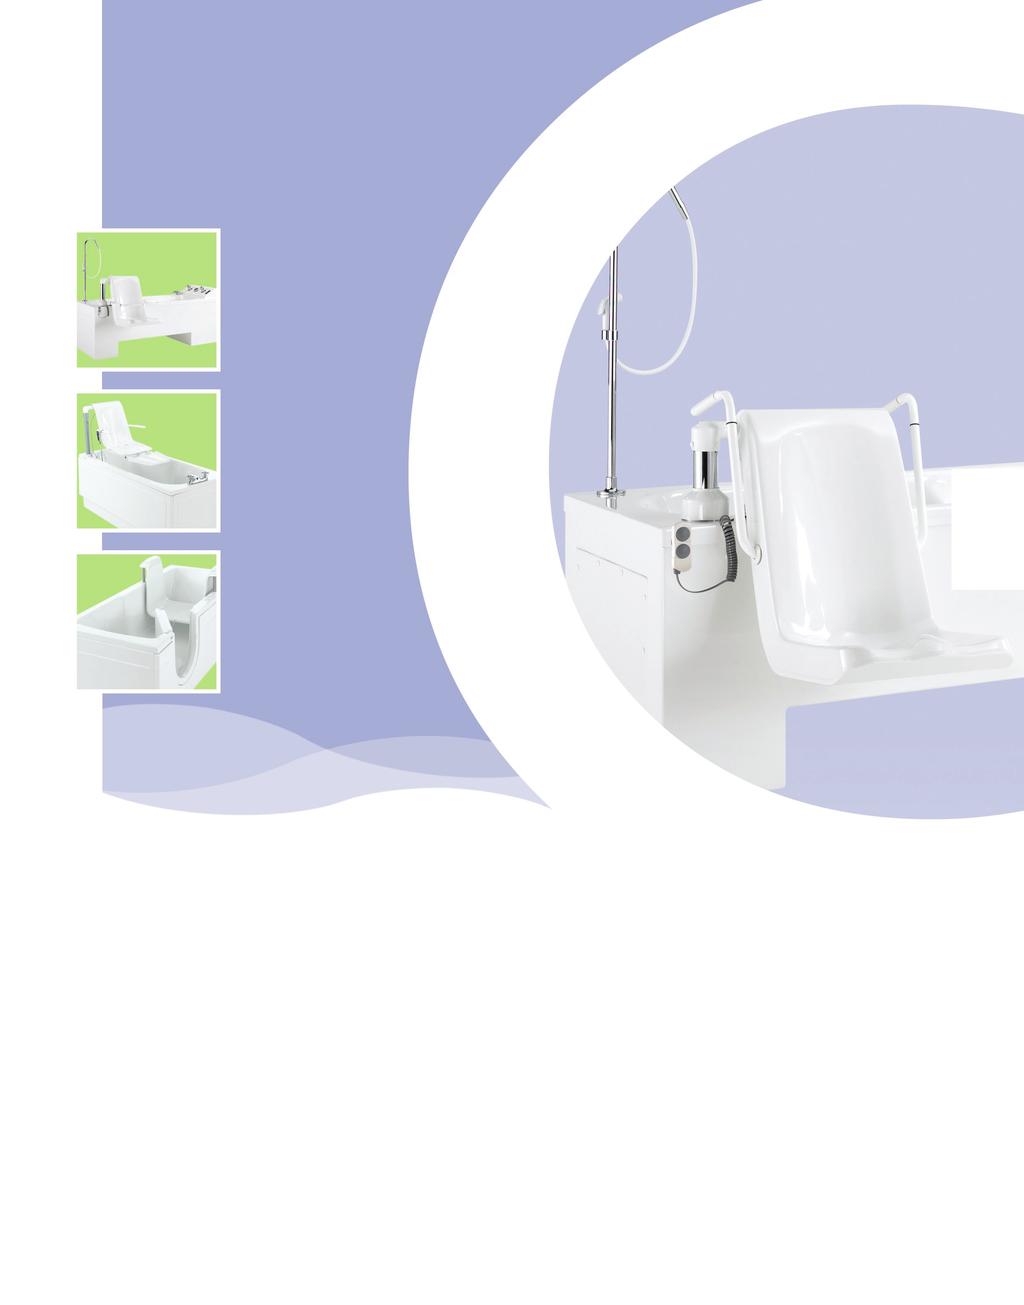 the Professional Range of Baths An integrated range designed